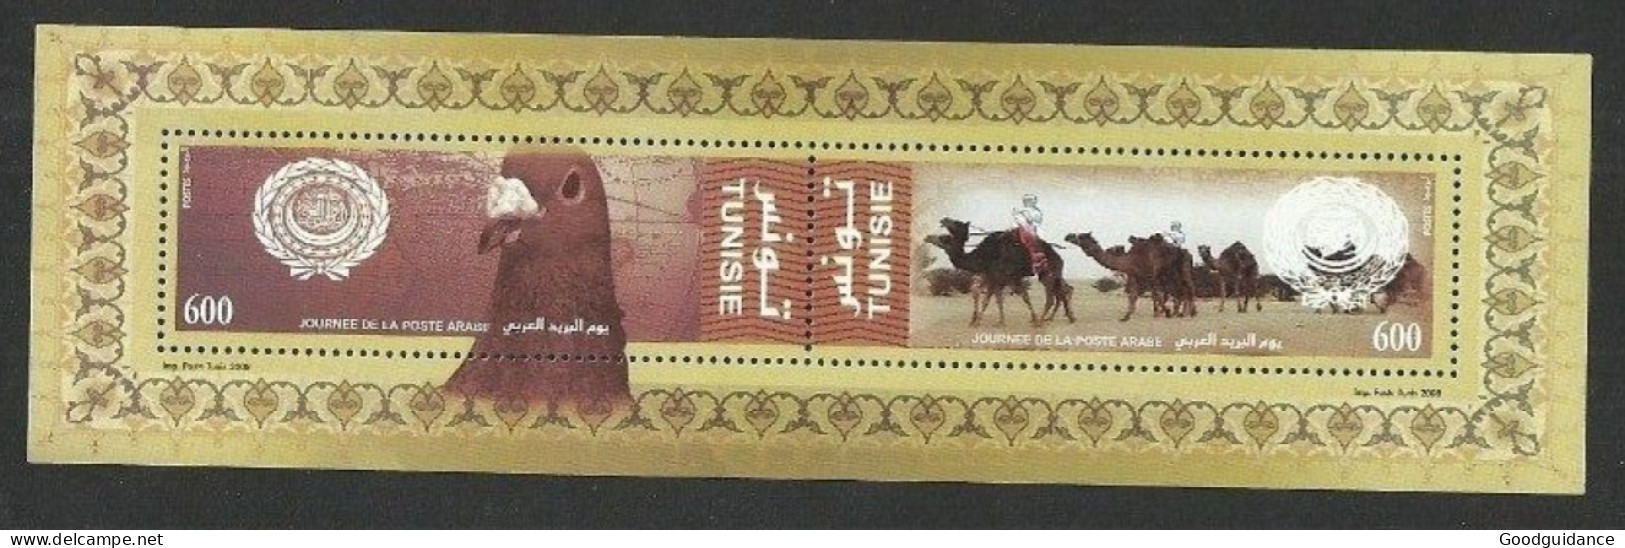 2008- Tunisia-  Minisheet  - Arab Post Day 2008 - Joint Issue - Bird - Camel - Desert - MNH** - Jordanie